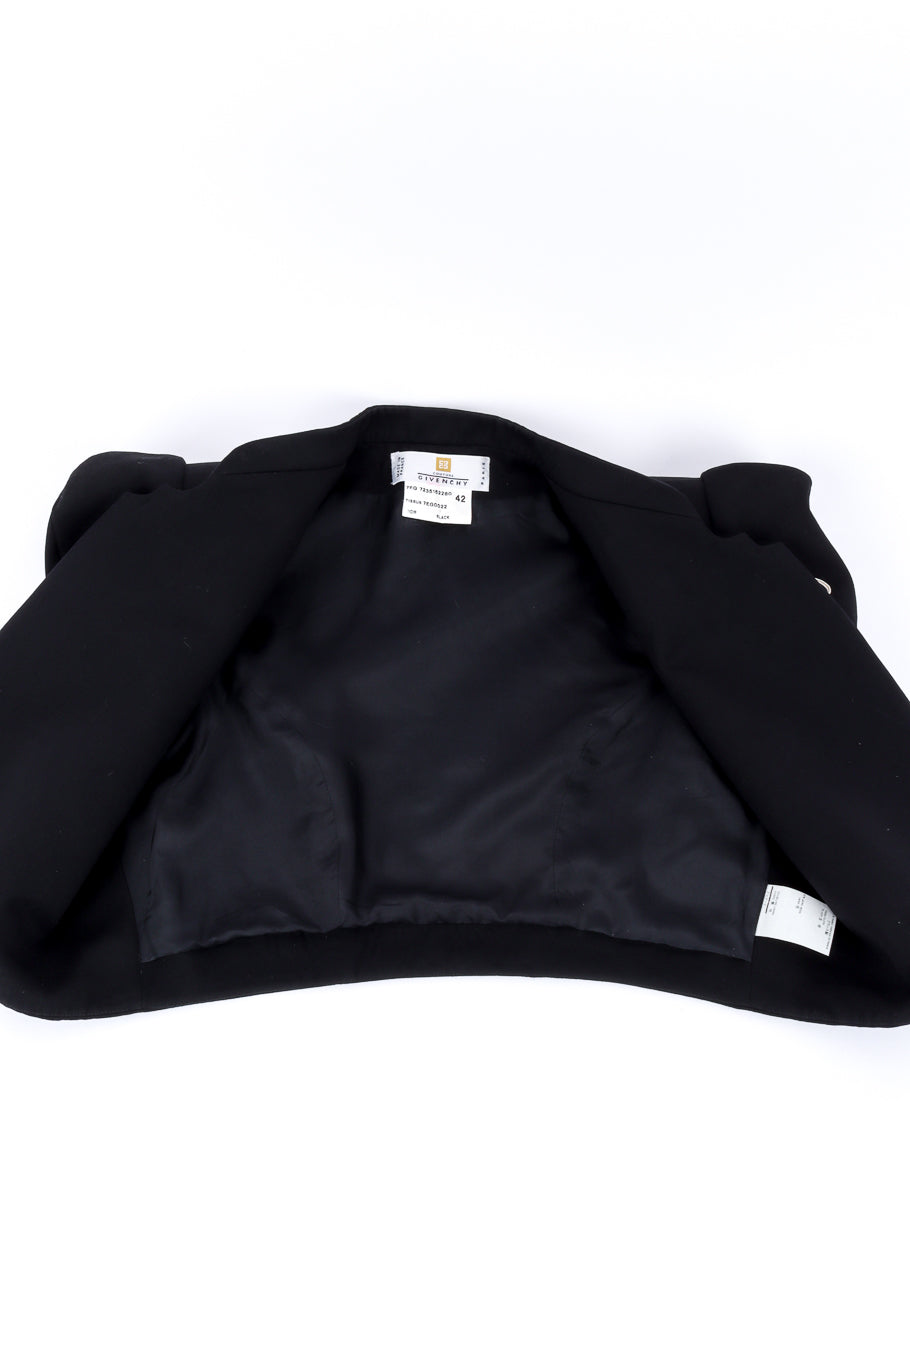 Vintage Givenchy Couture Soutache Matador Jacket view of lining @recessla